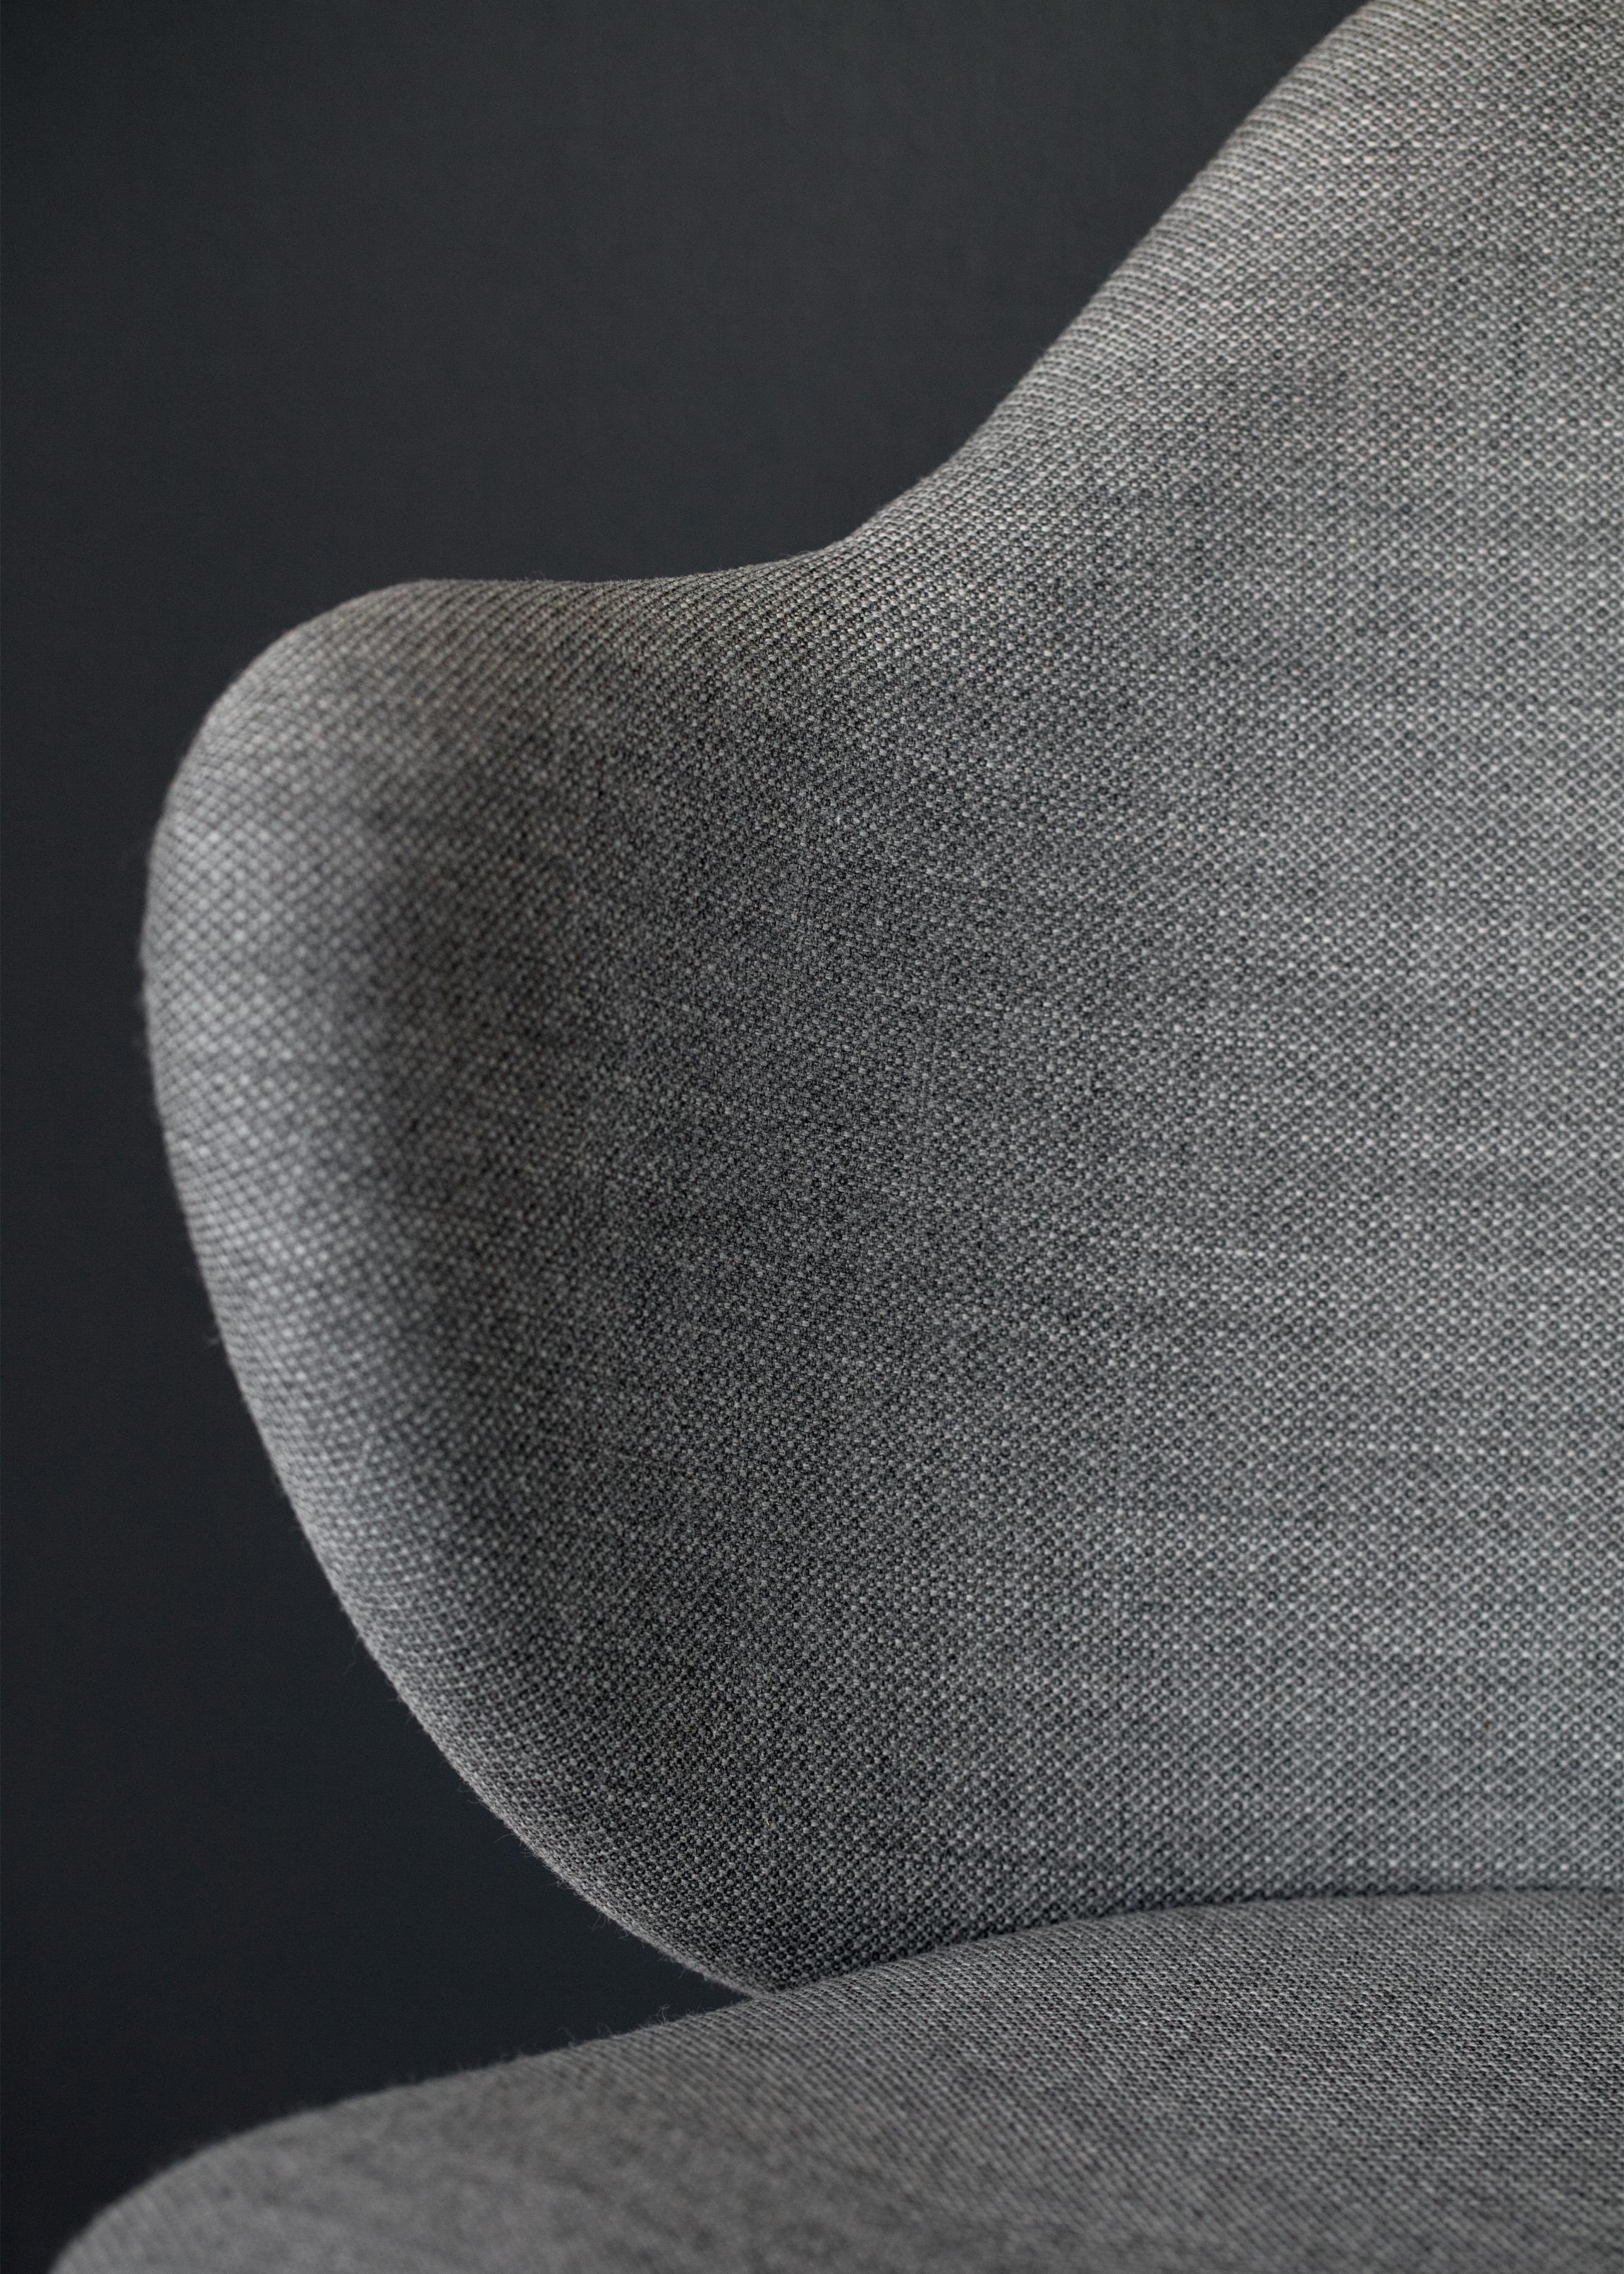 Beige Fiord Lassen Chair by Lassen In New Condition For Sale In Geneve, CH